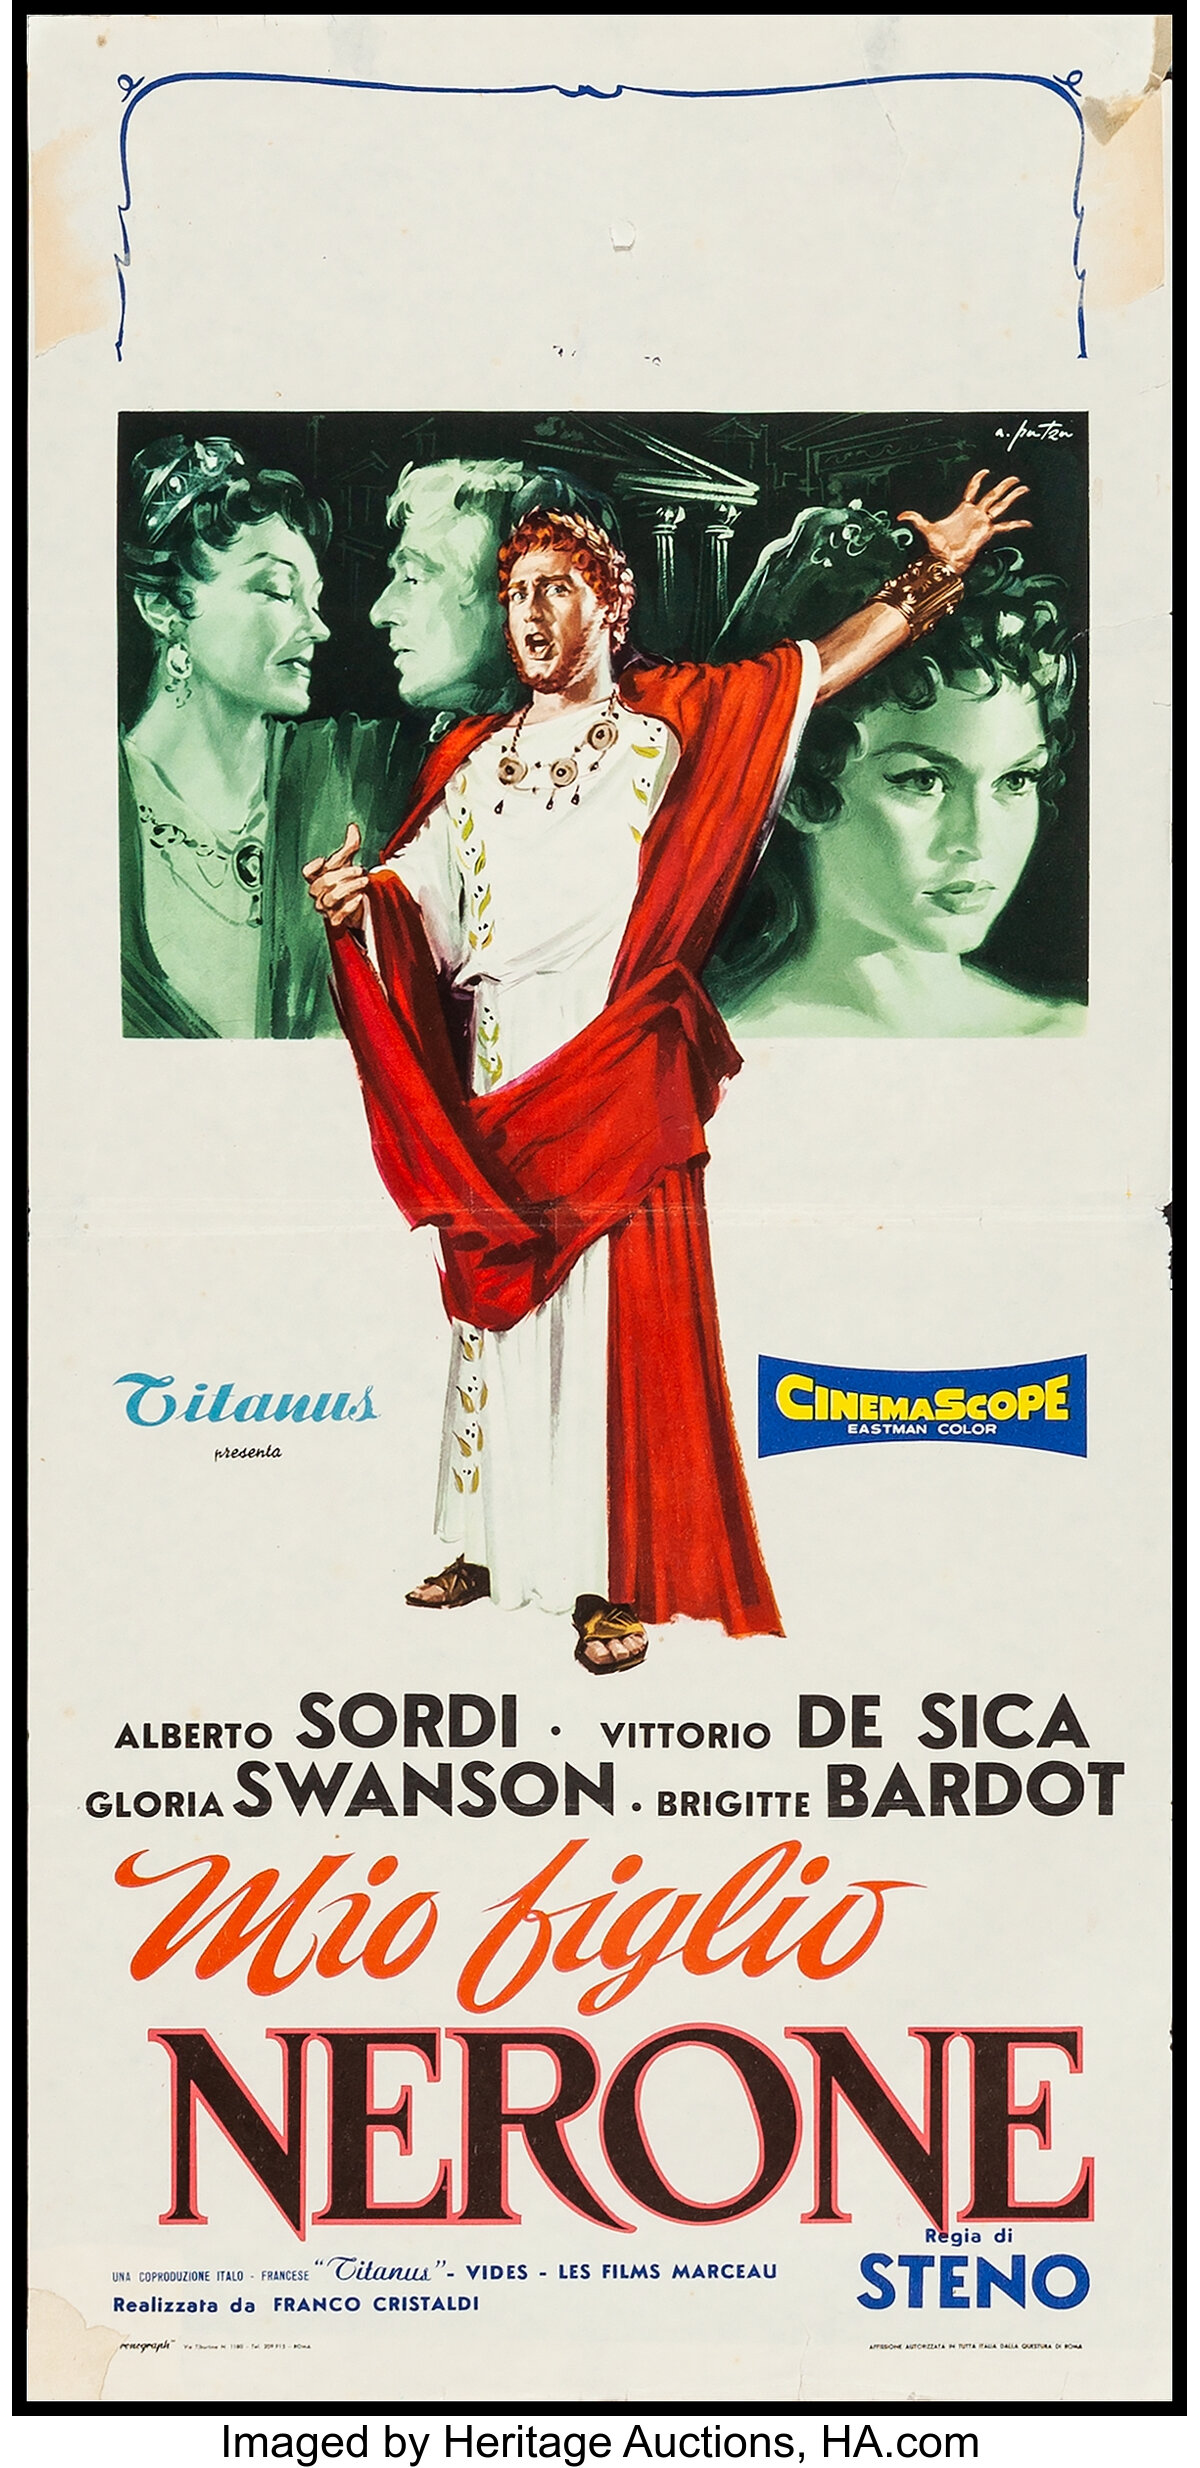 Harakiri Movie Poster 1963 French 1 panel (47x63)